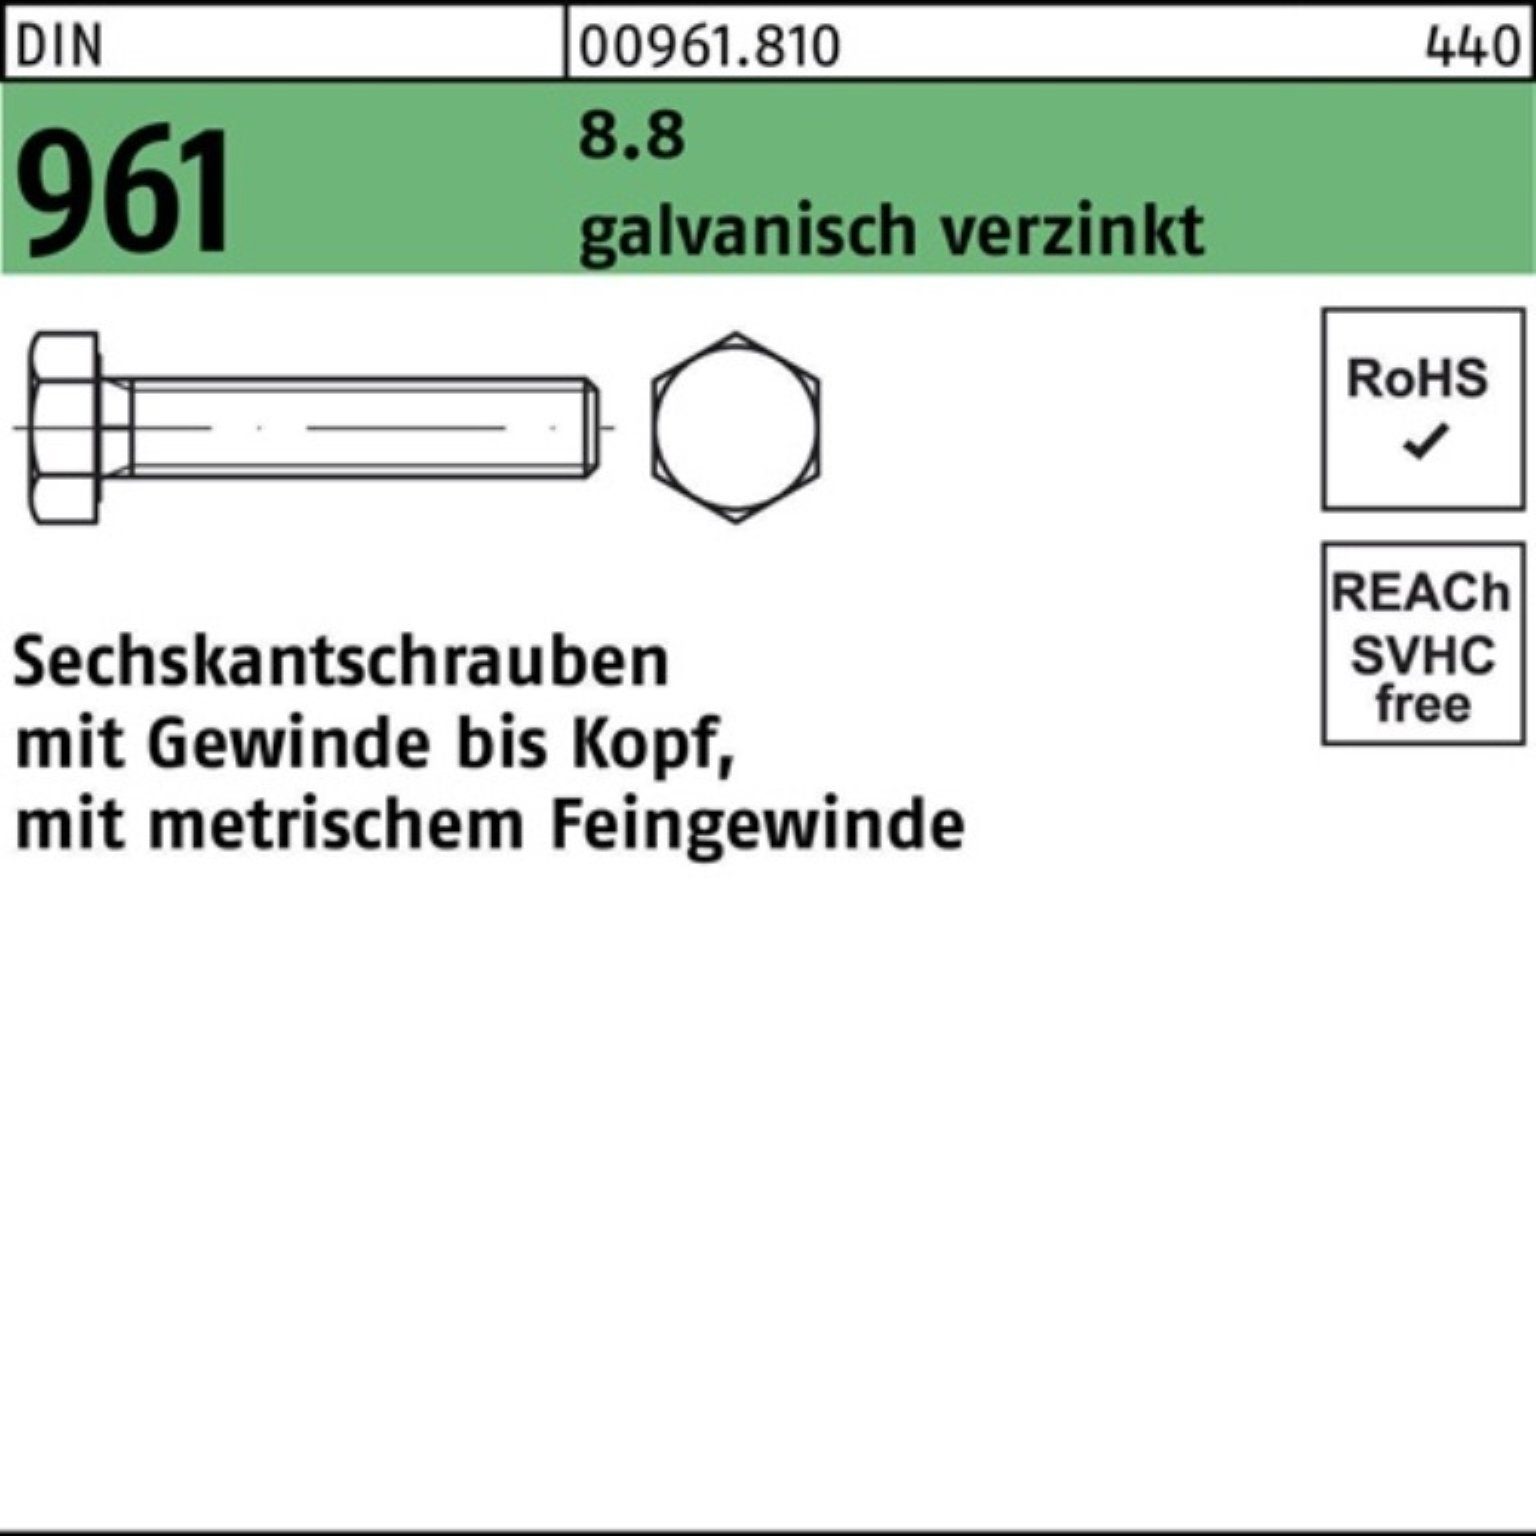 25 Sechskantschraube Reyher Pack 55 M18x1,5x 8.8 961 DIN 100er Sechskantschraube galv.verz. VG